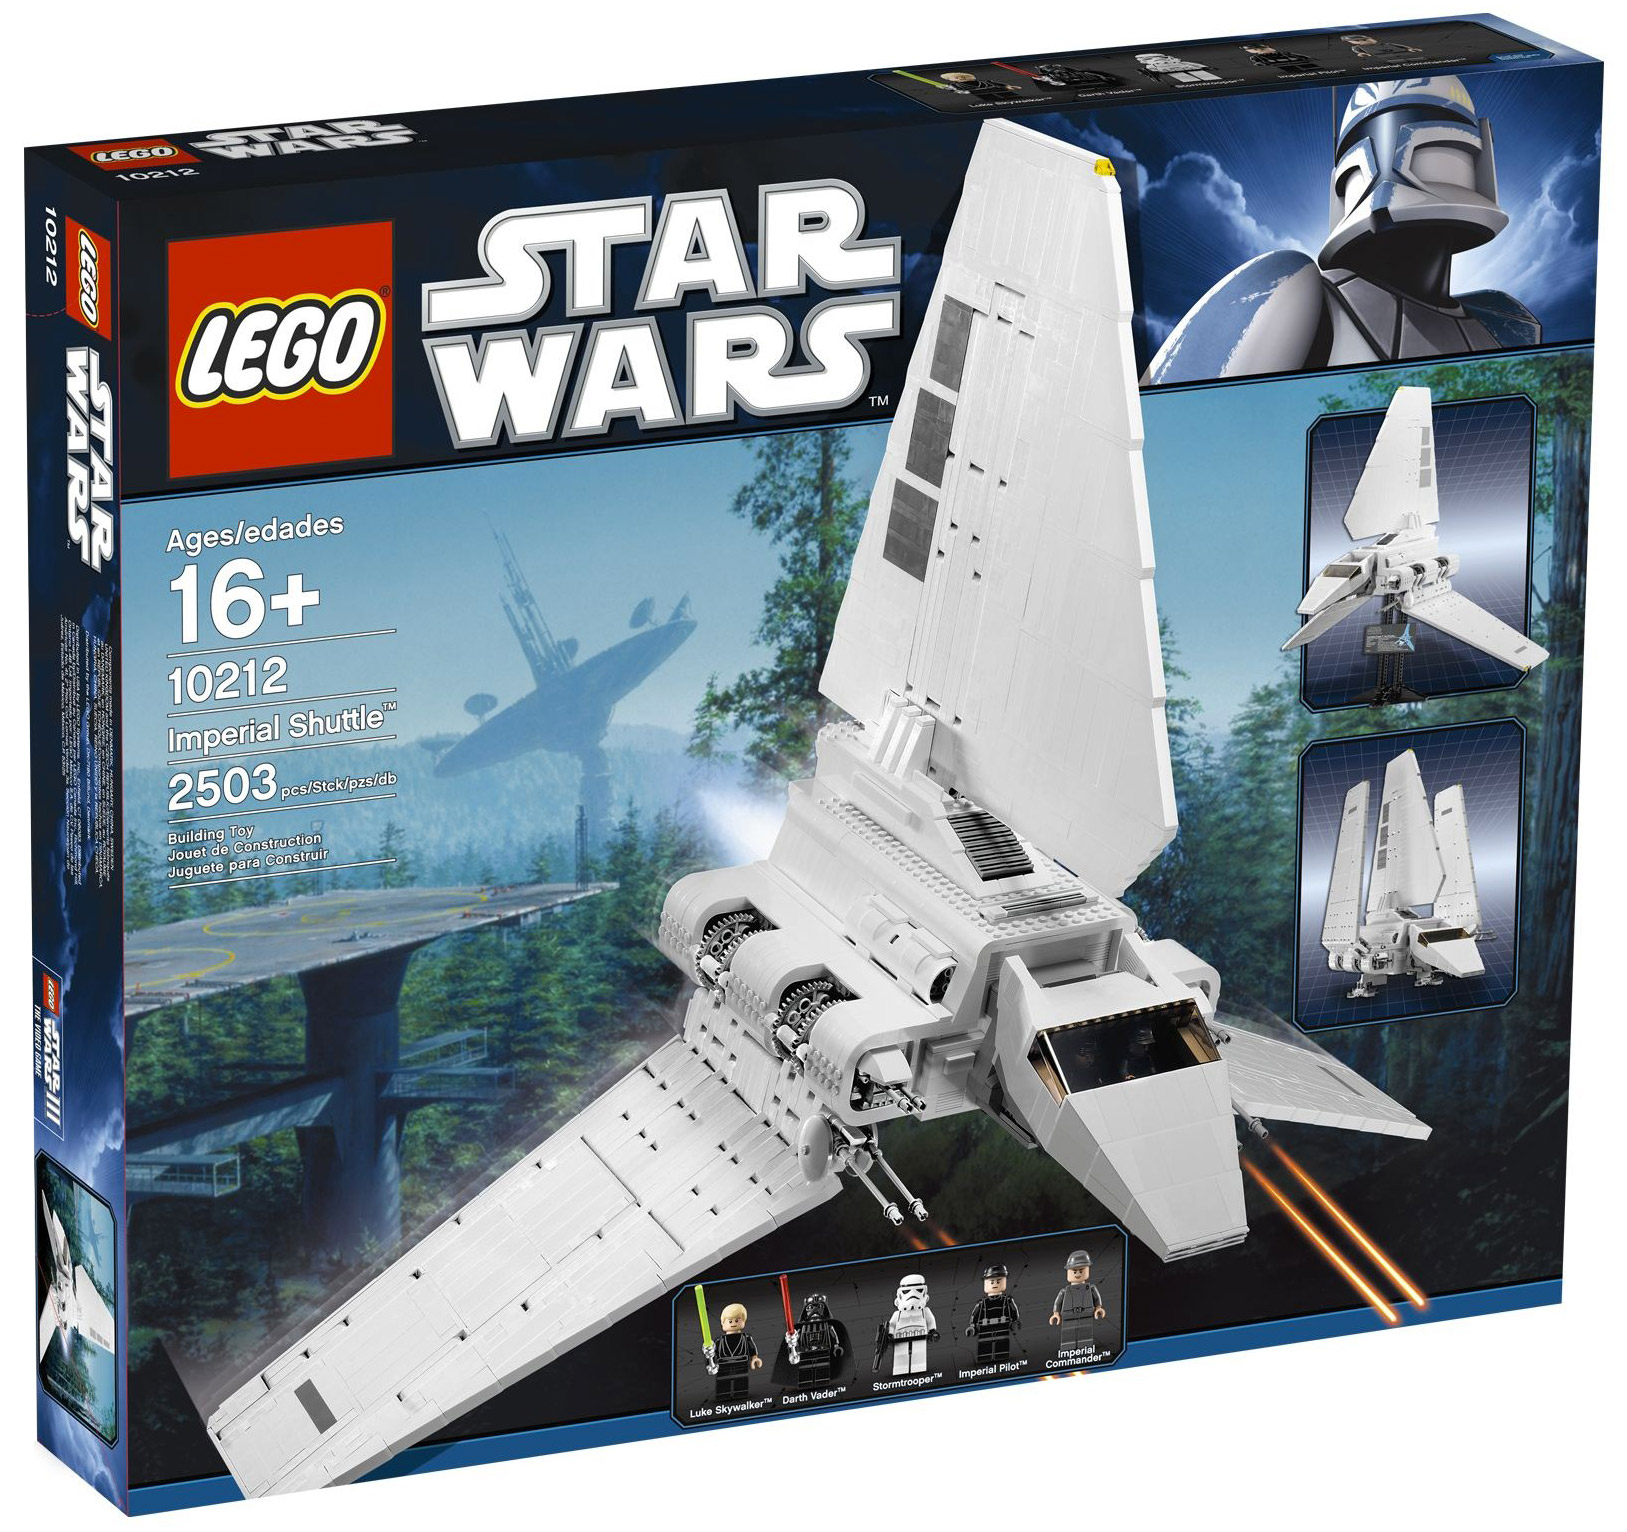 LEGO Star Wars 8099: Vaisseau Imperial Star Destroyer - Echelle réd